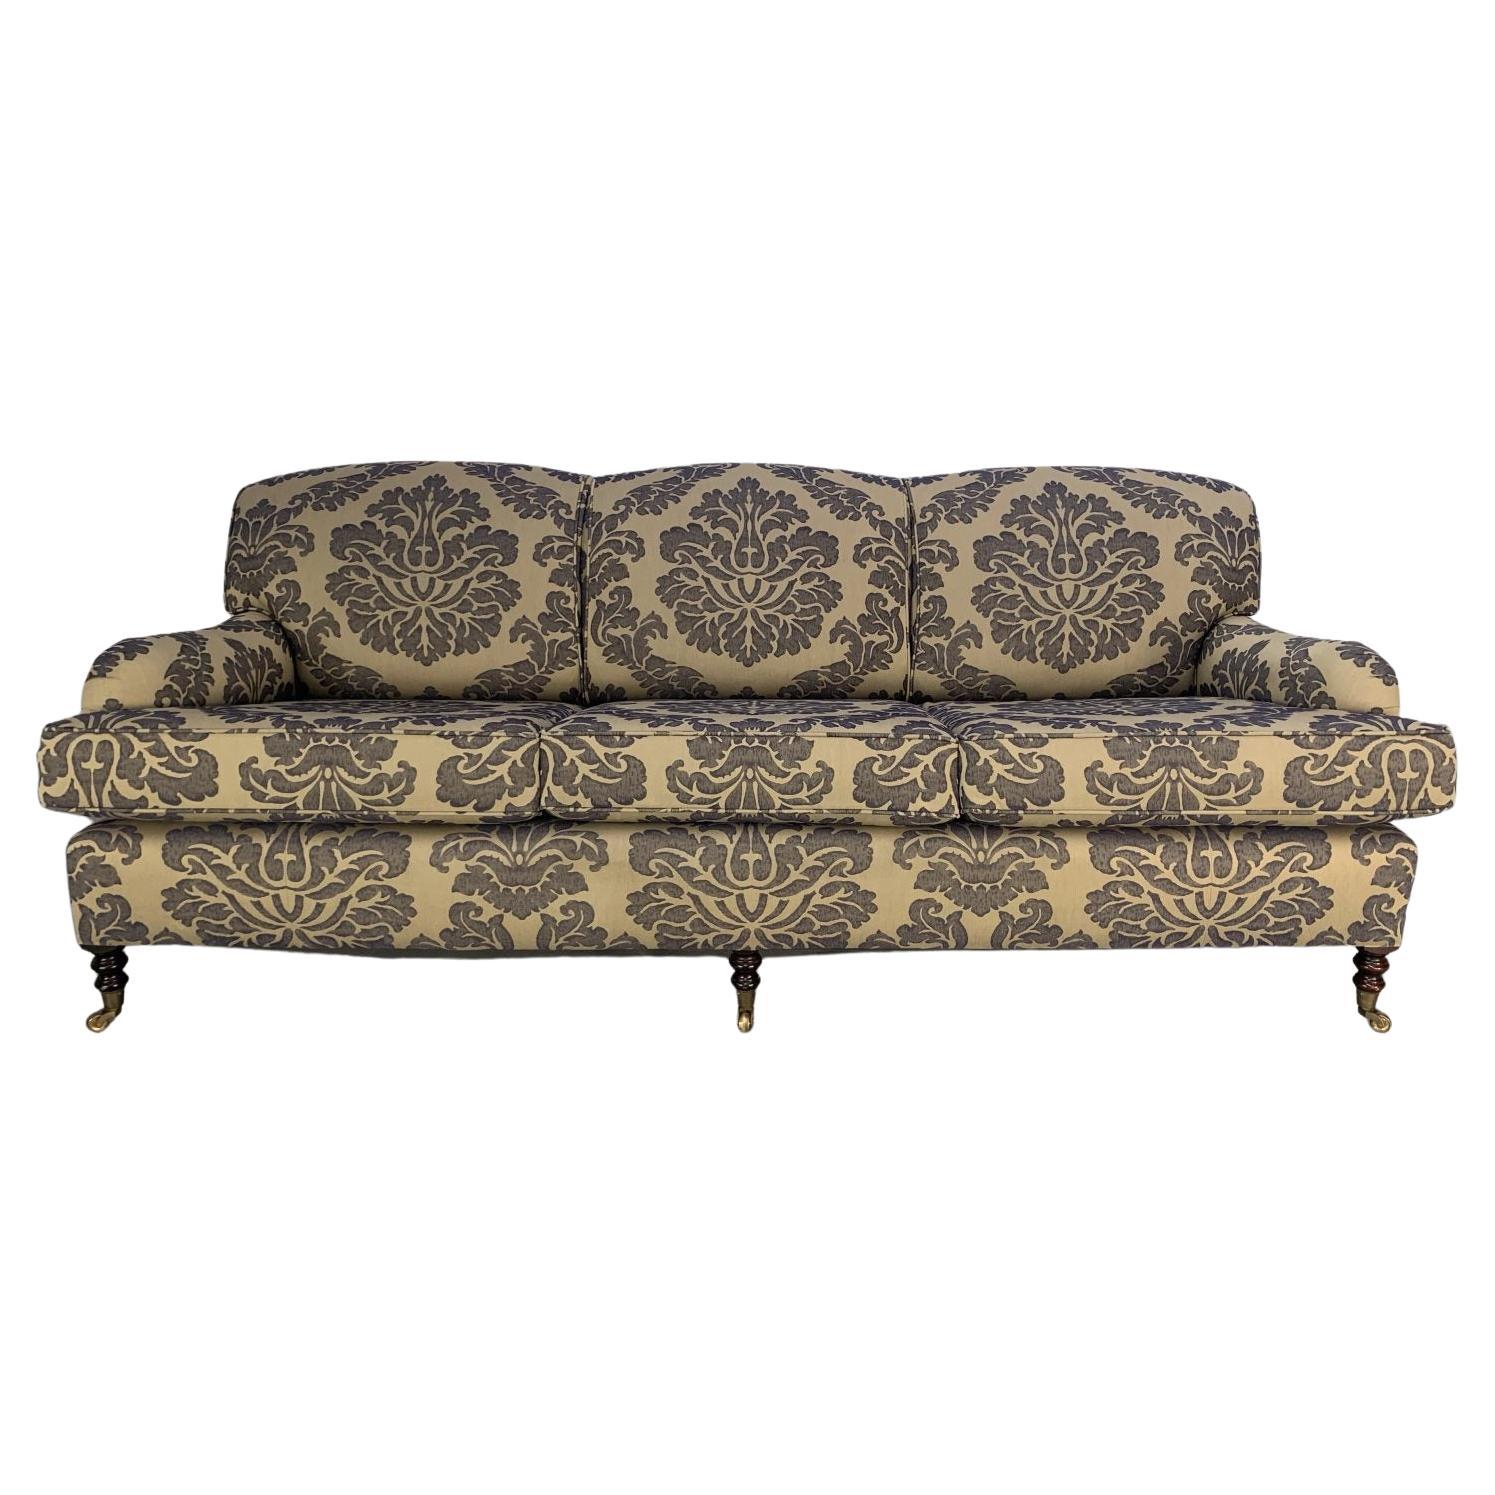 George Smith Signature “Standard-Arm” Large 3-Seat Sofa in Bernini Damask